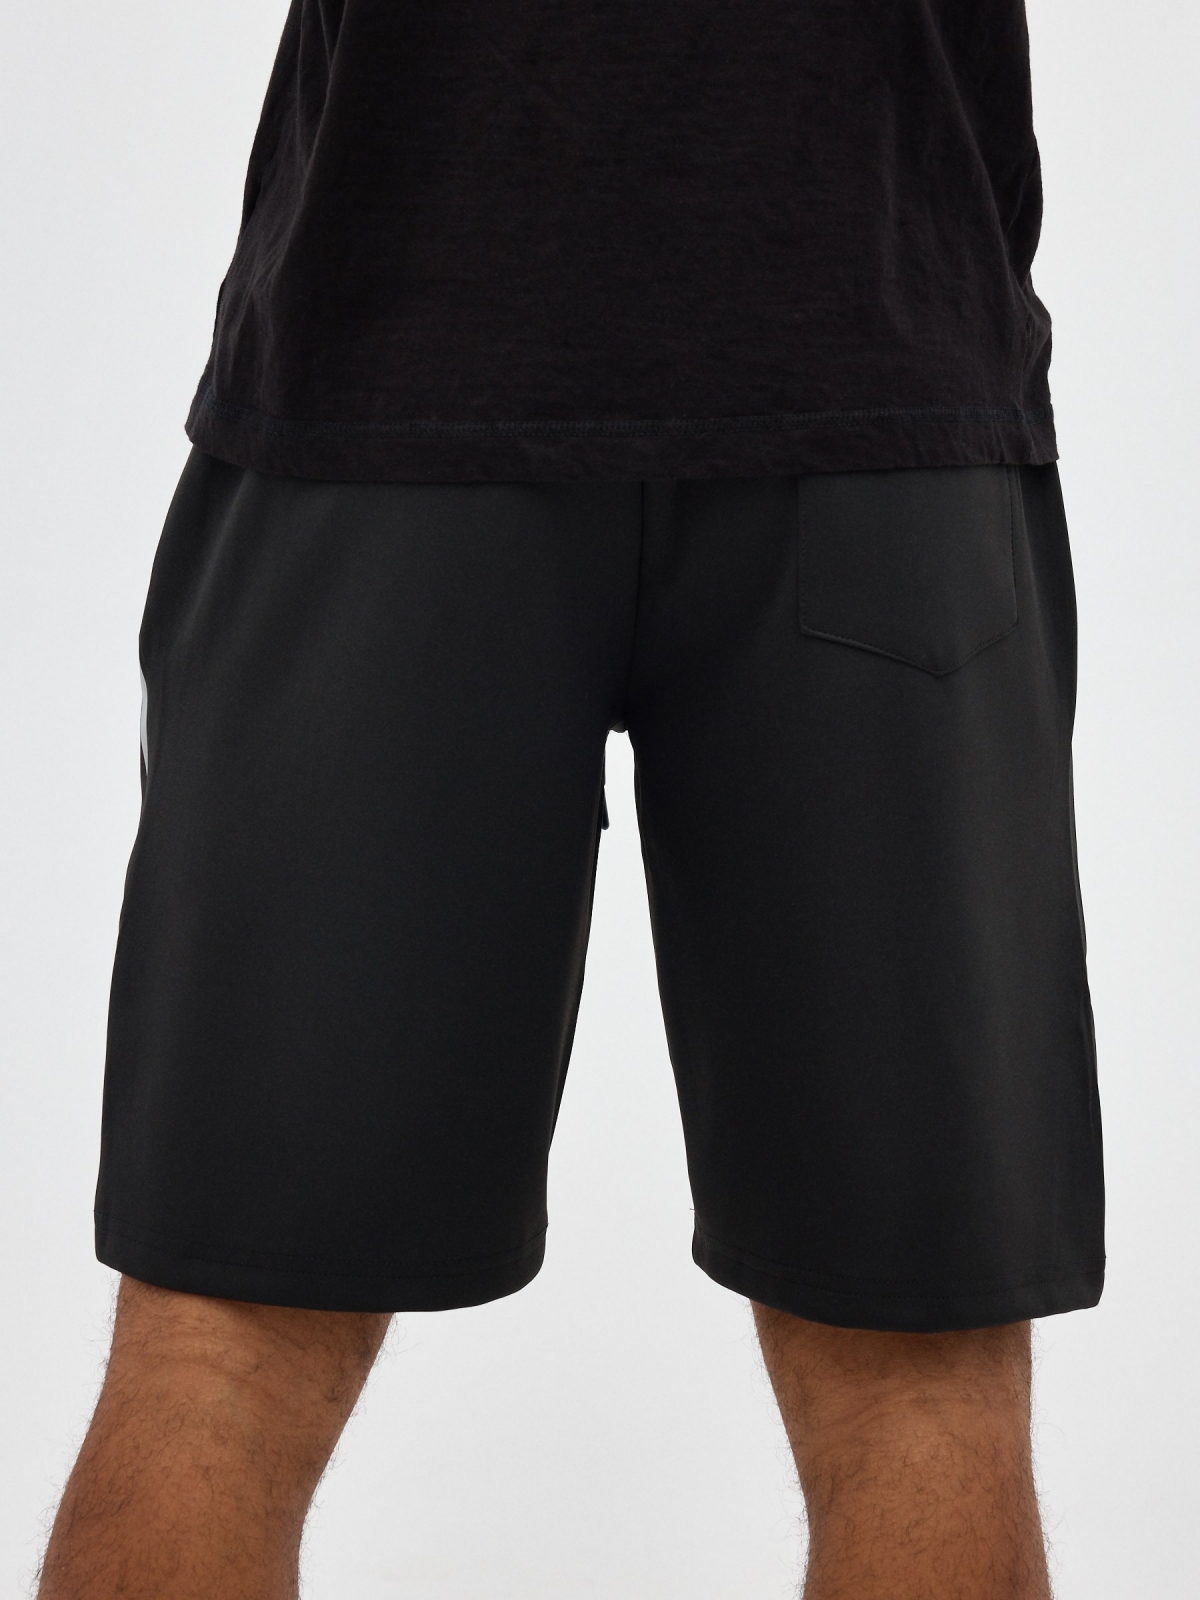 Bermuda jogger shorts black detail view